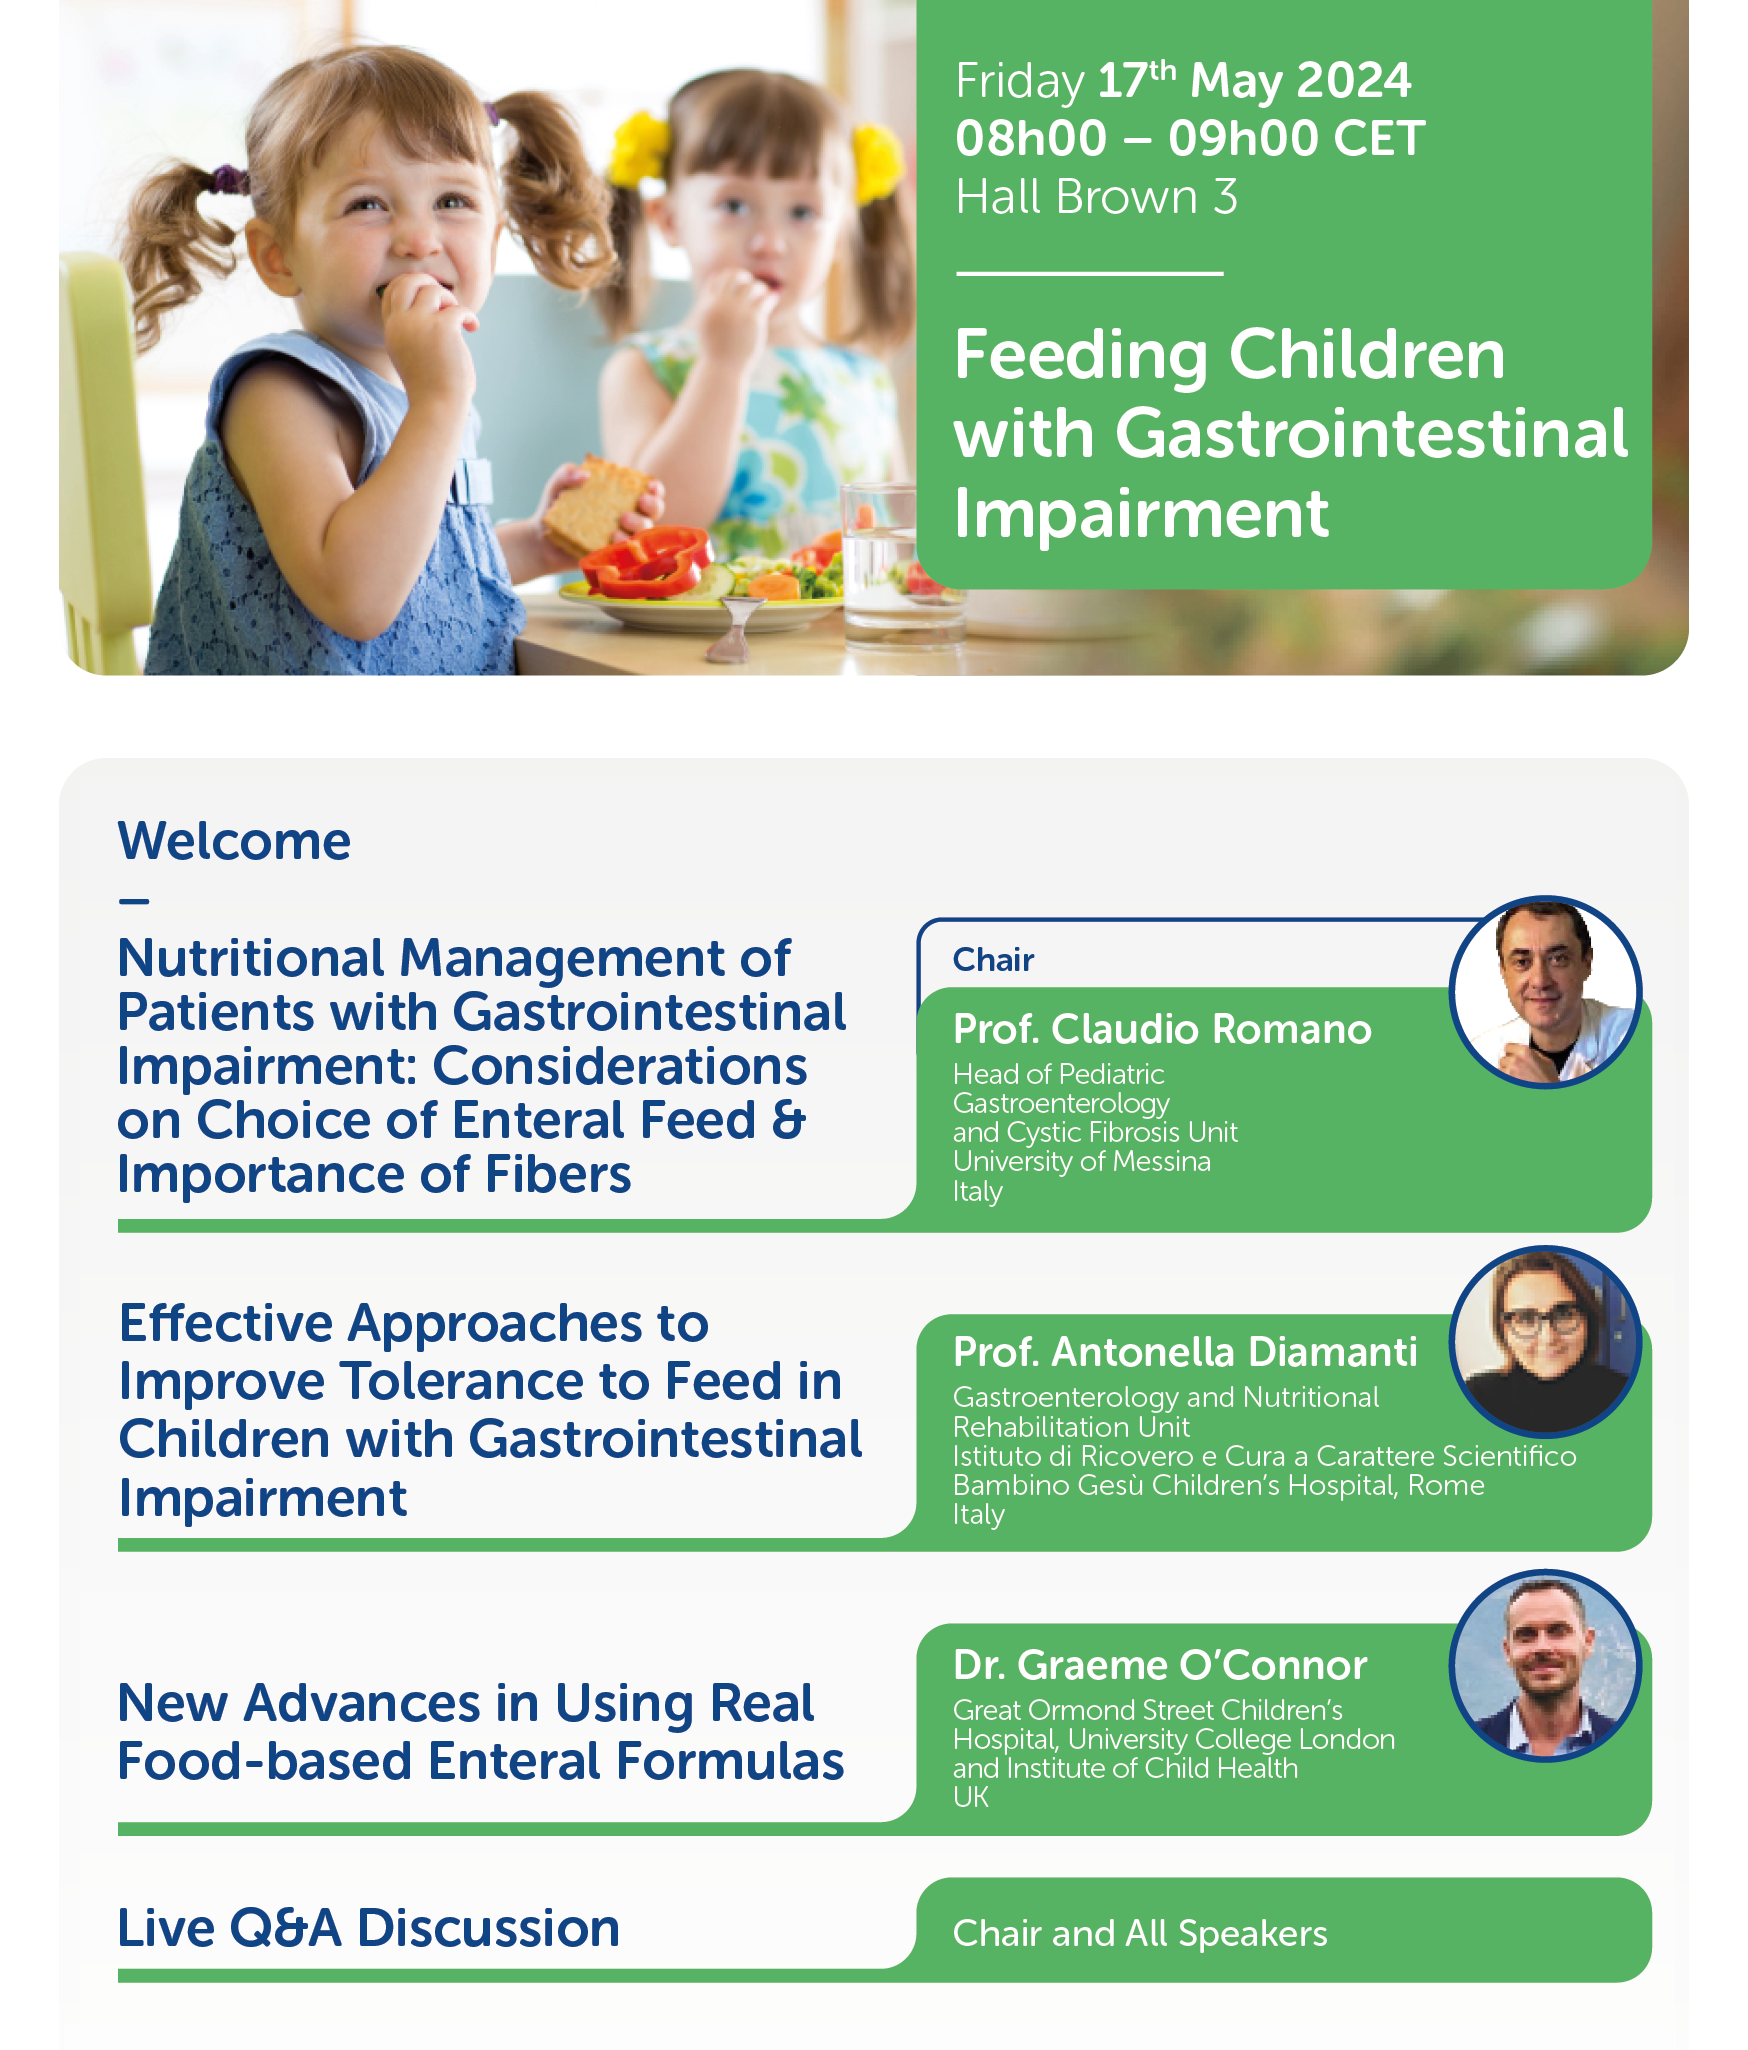 Feeding Children with Gastrointestinal Impairment